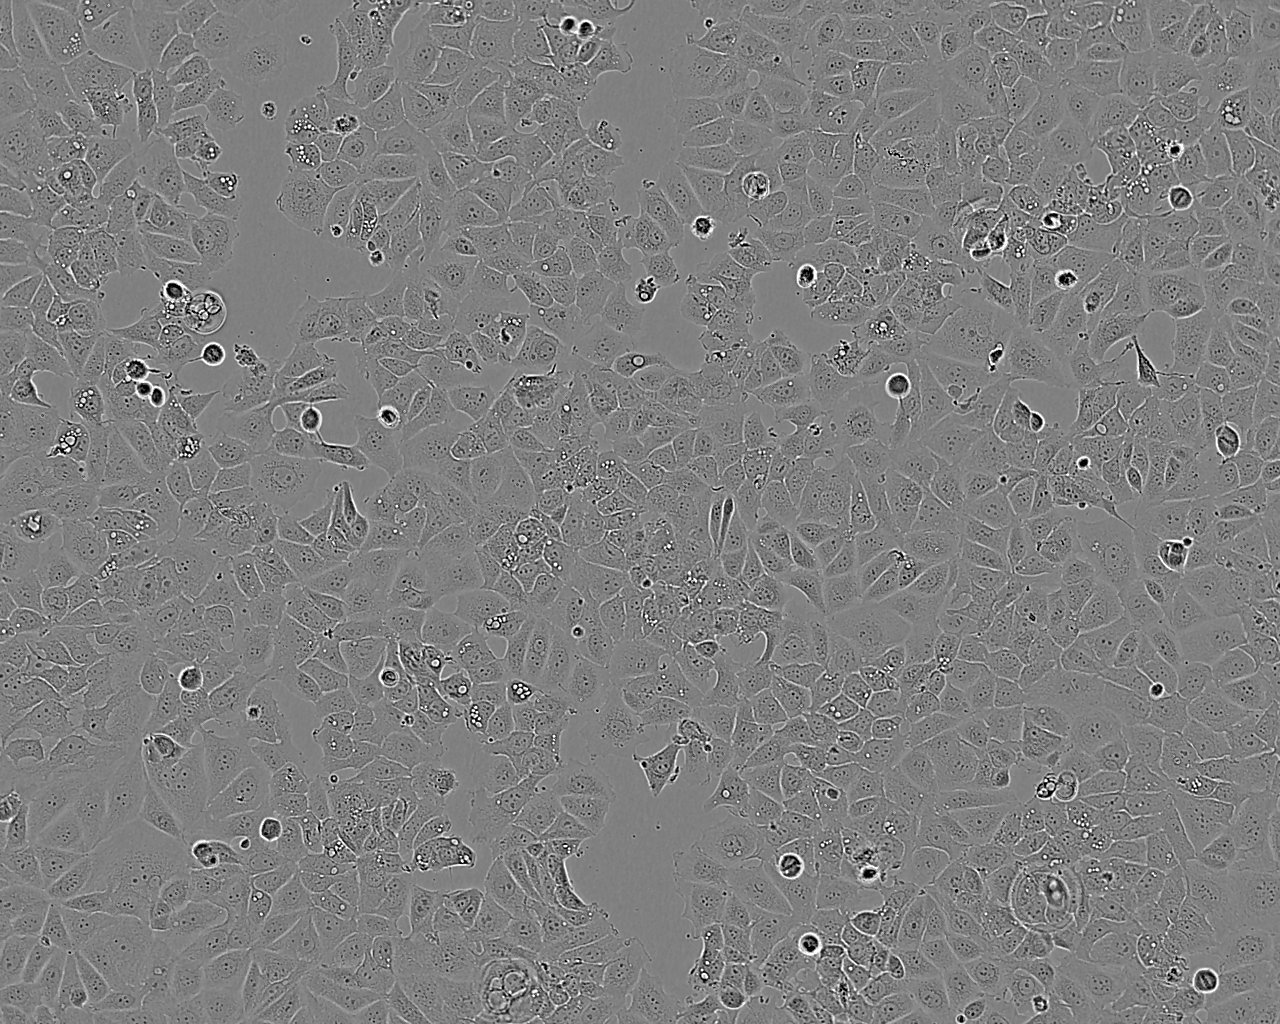 Onda 11 epithelioid cells人脑神经胶质瘤细胞系,Onda 11 epithelioid cell